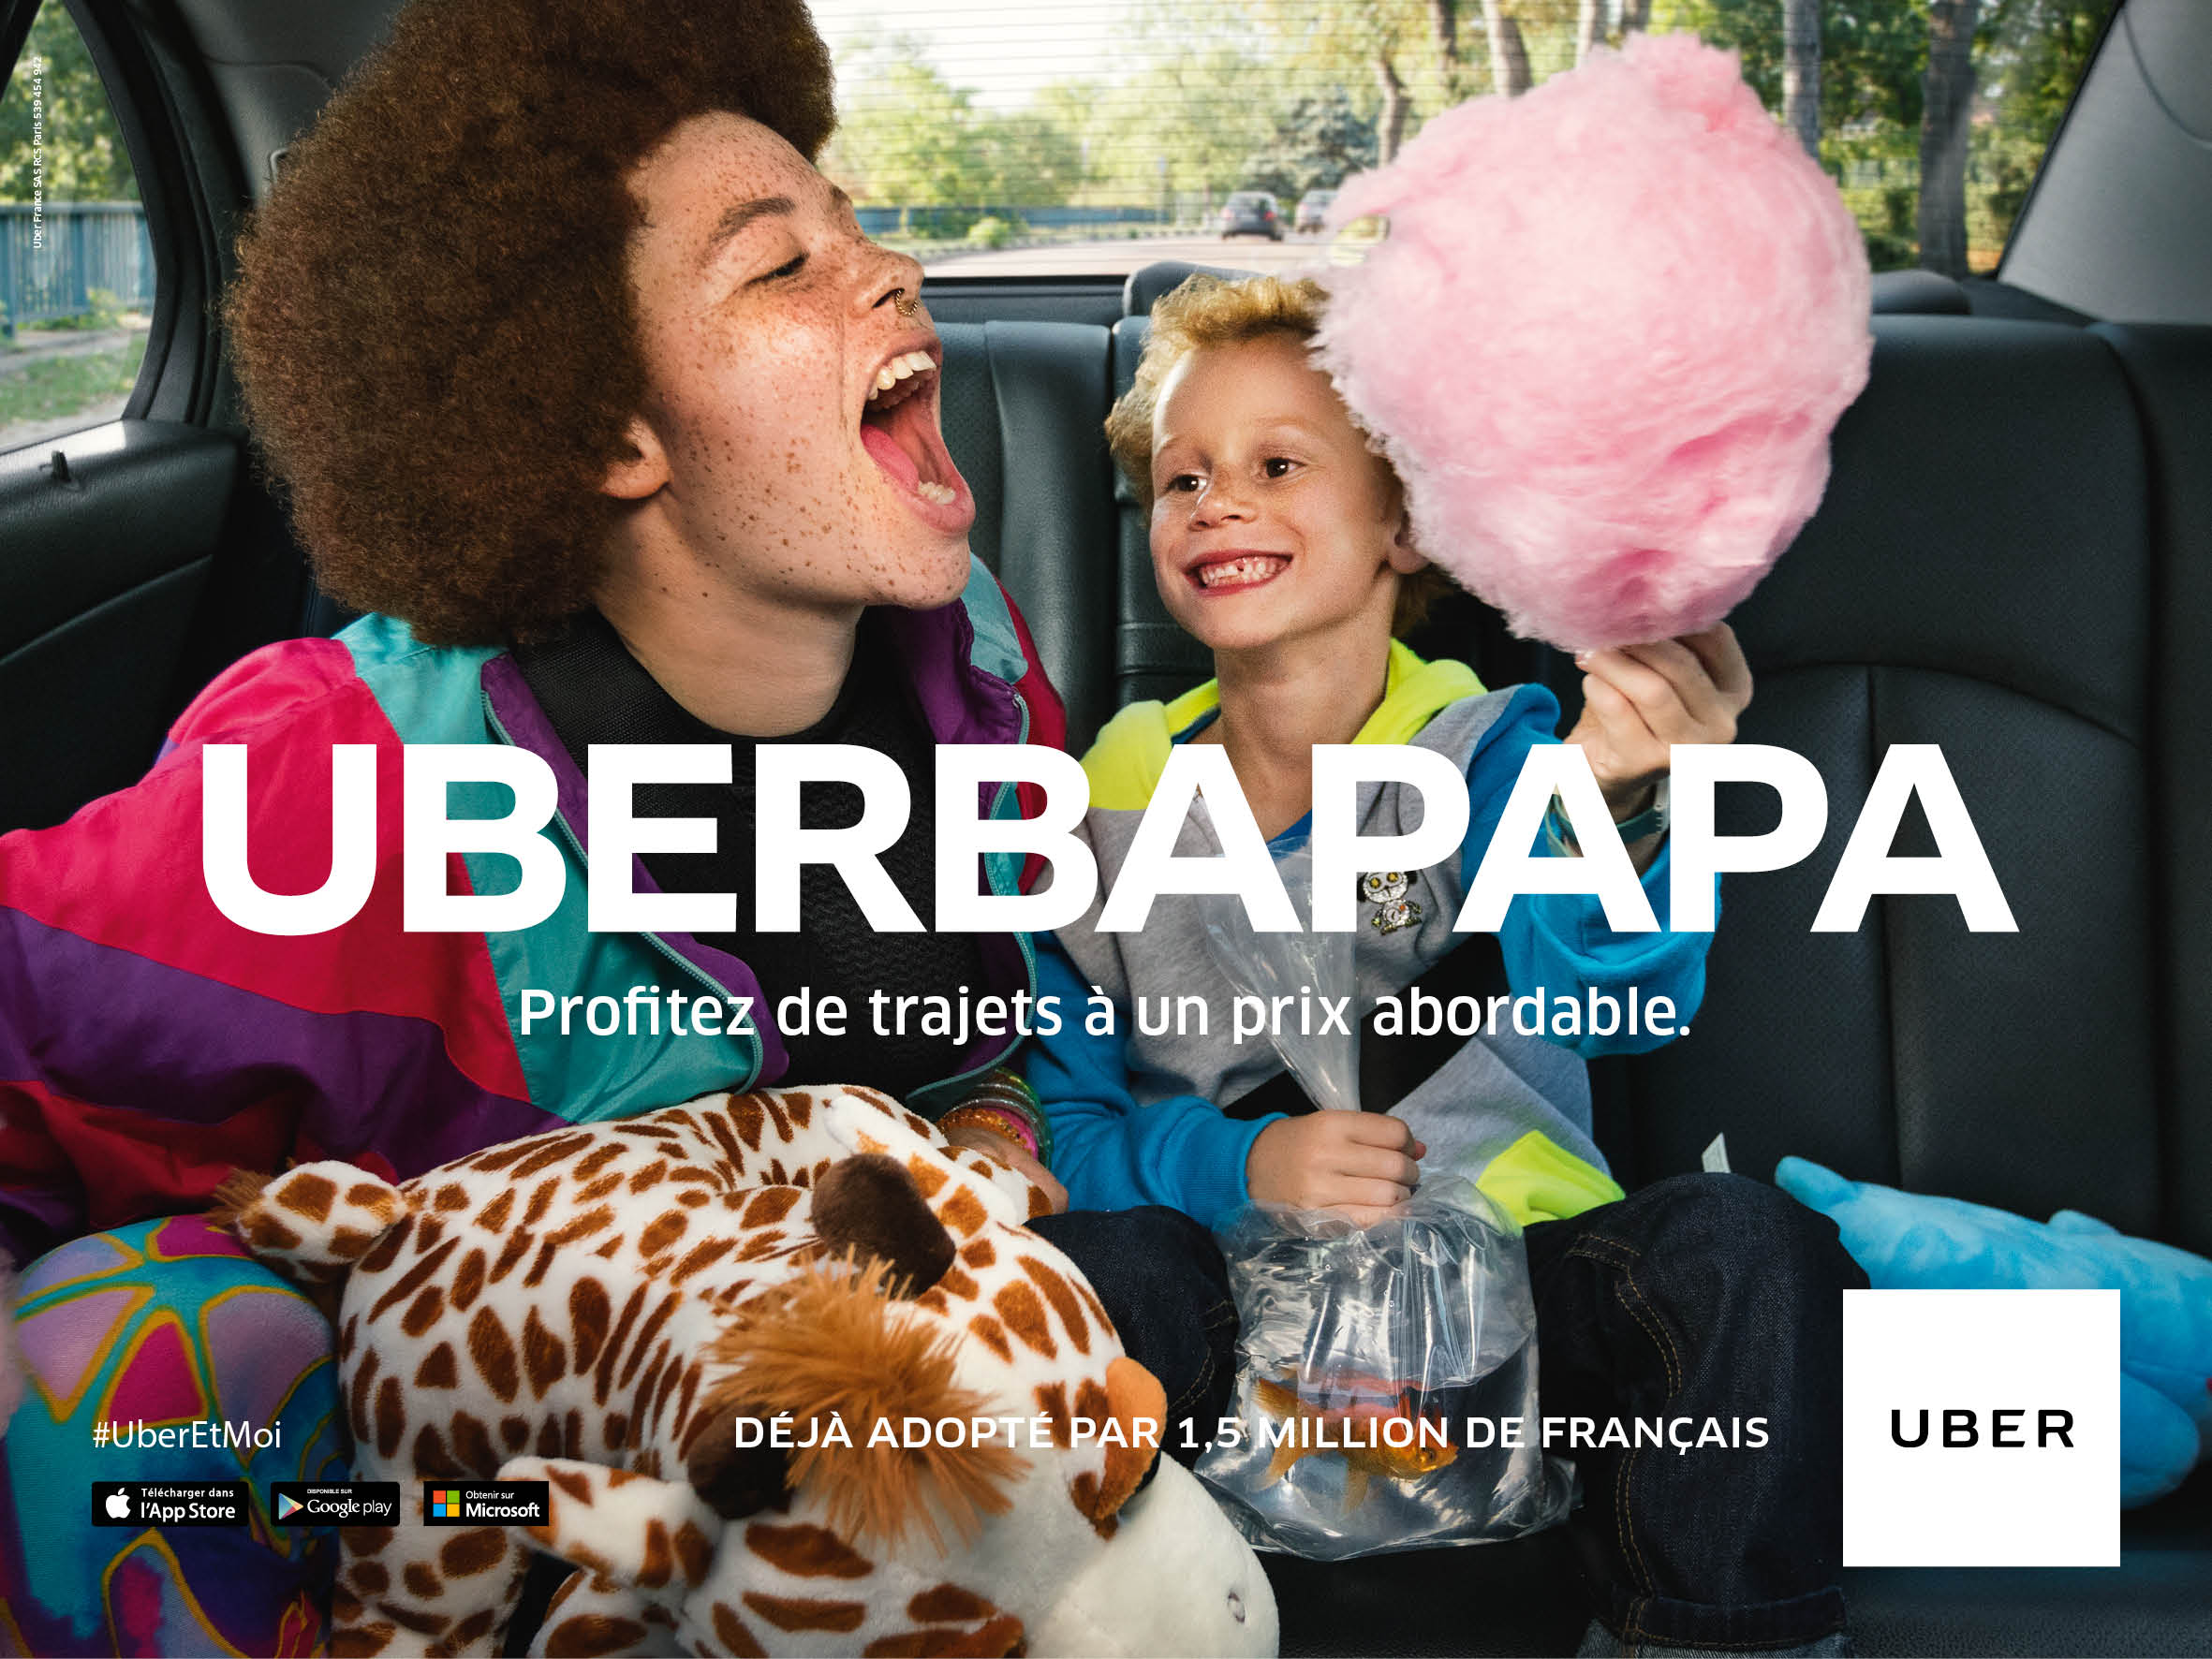 uber-france-publicite-marketing-application-utilisateurs-passagers-mars-2016-agence-marcel-publicis-14